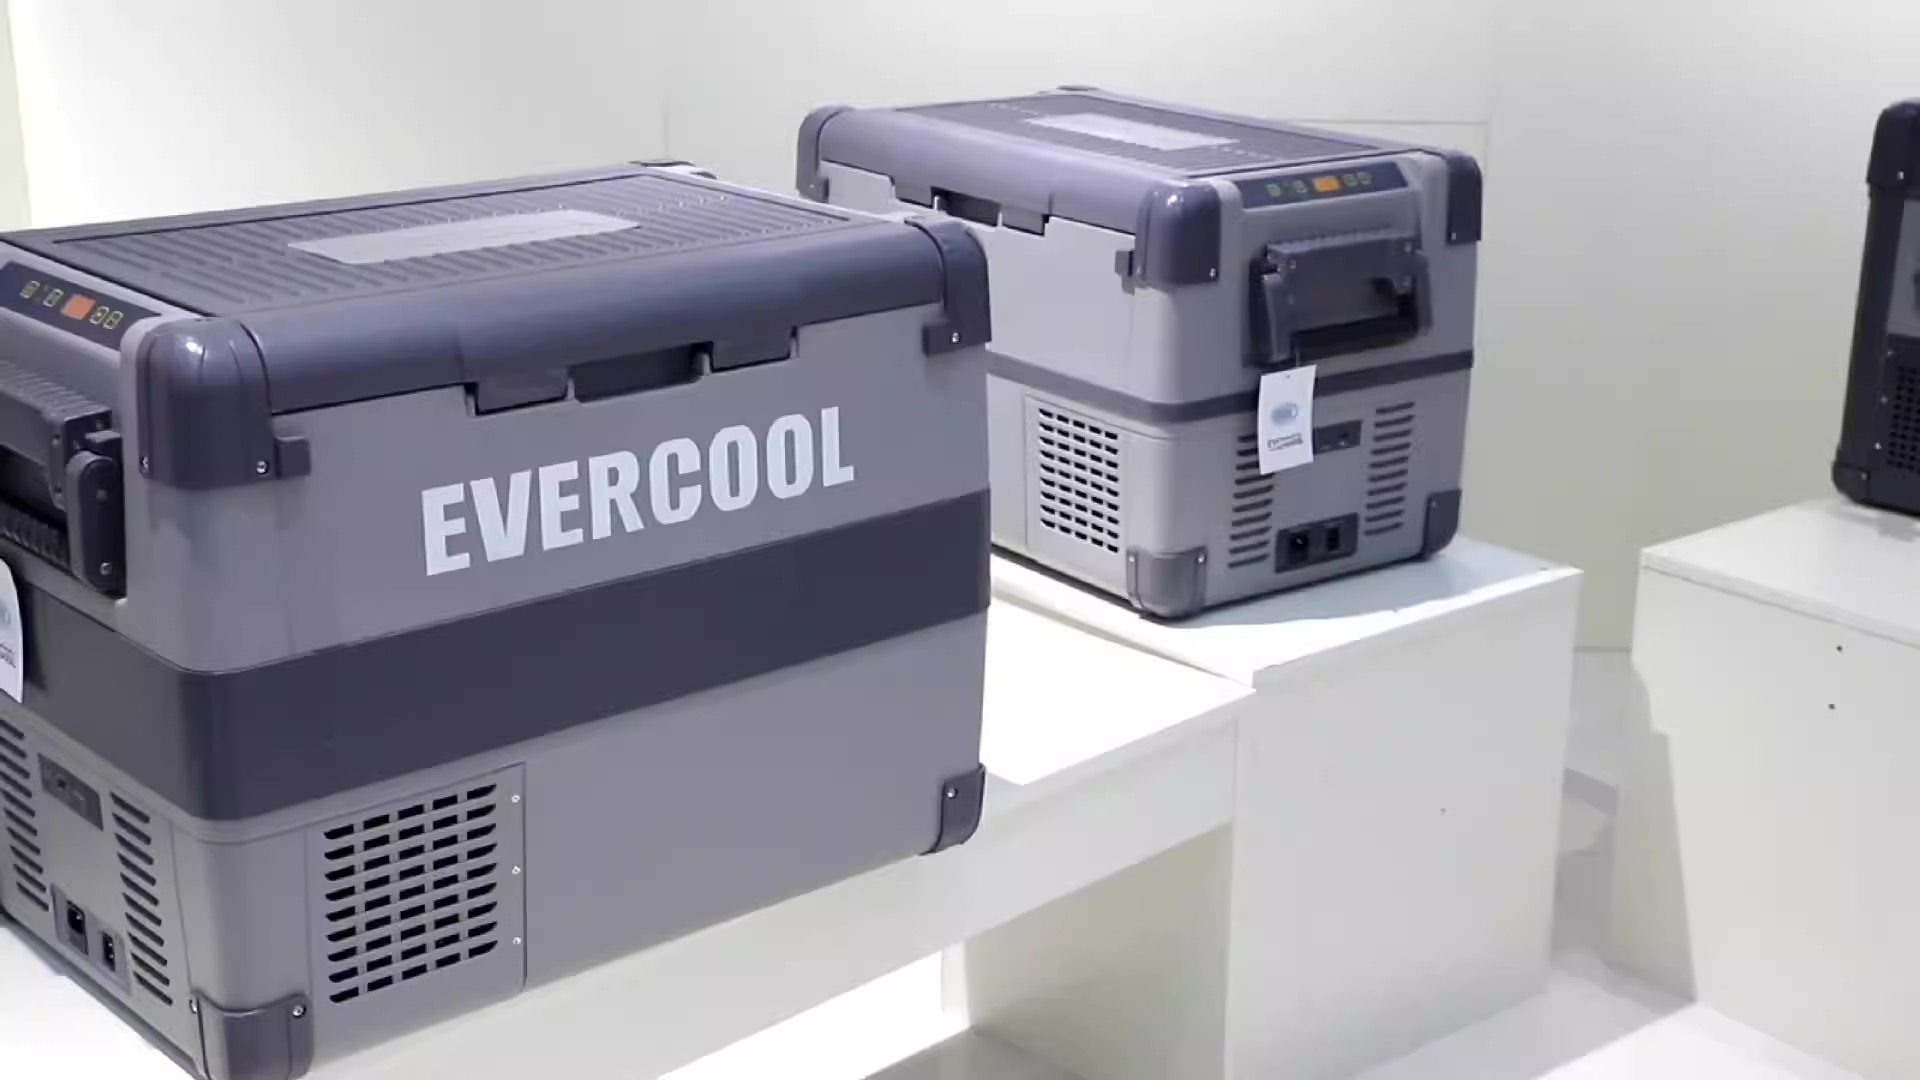 12 Volt Portable RV Refrigerator – Euhomy